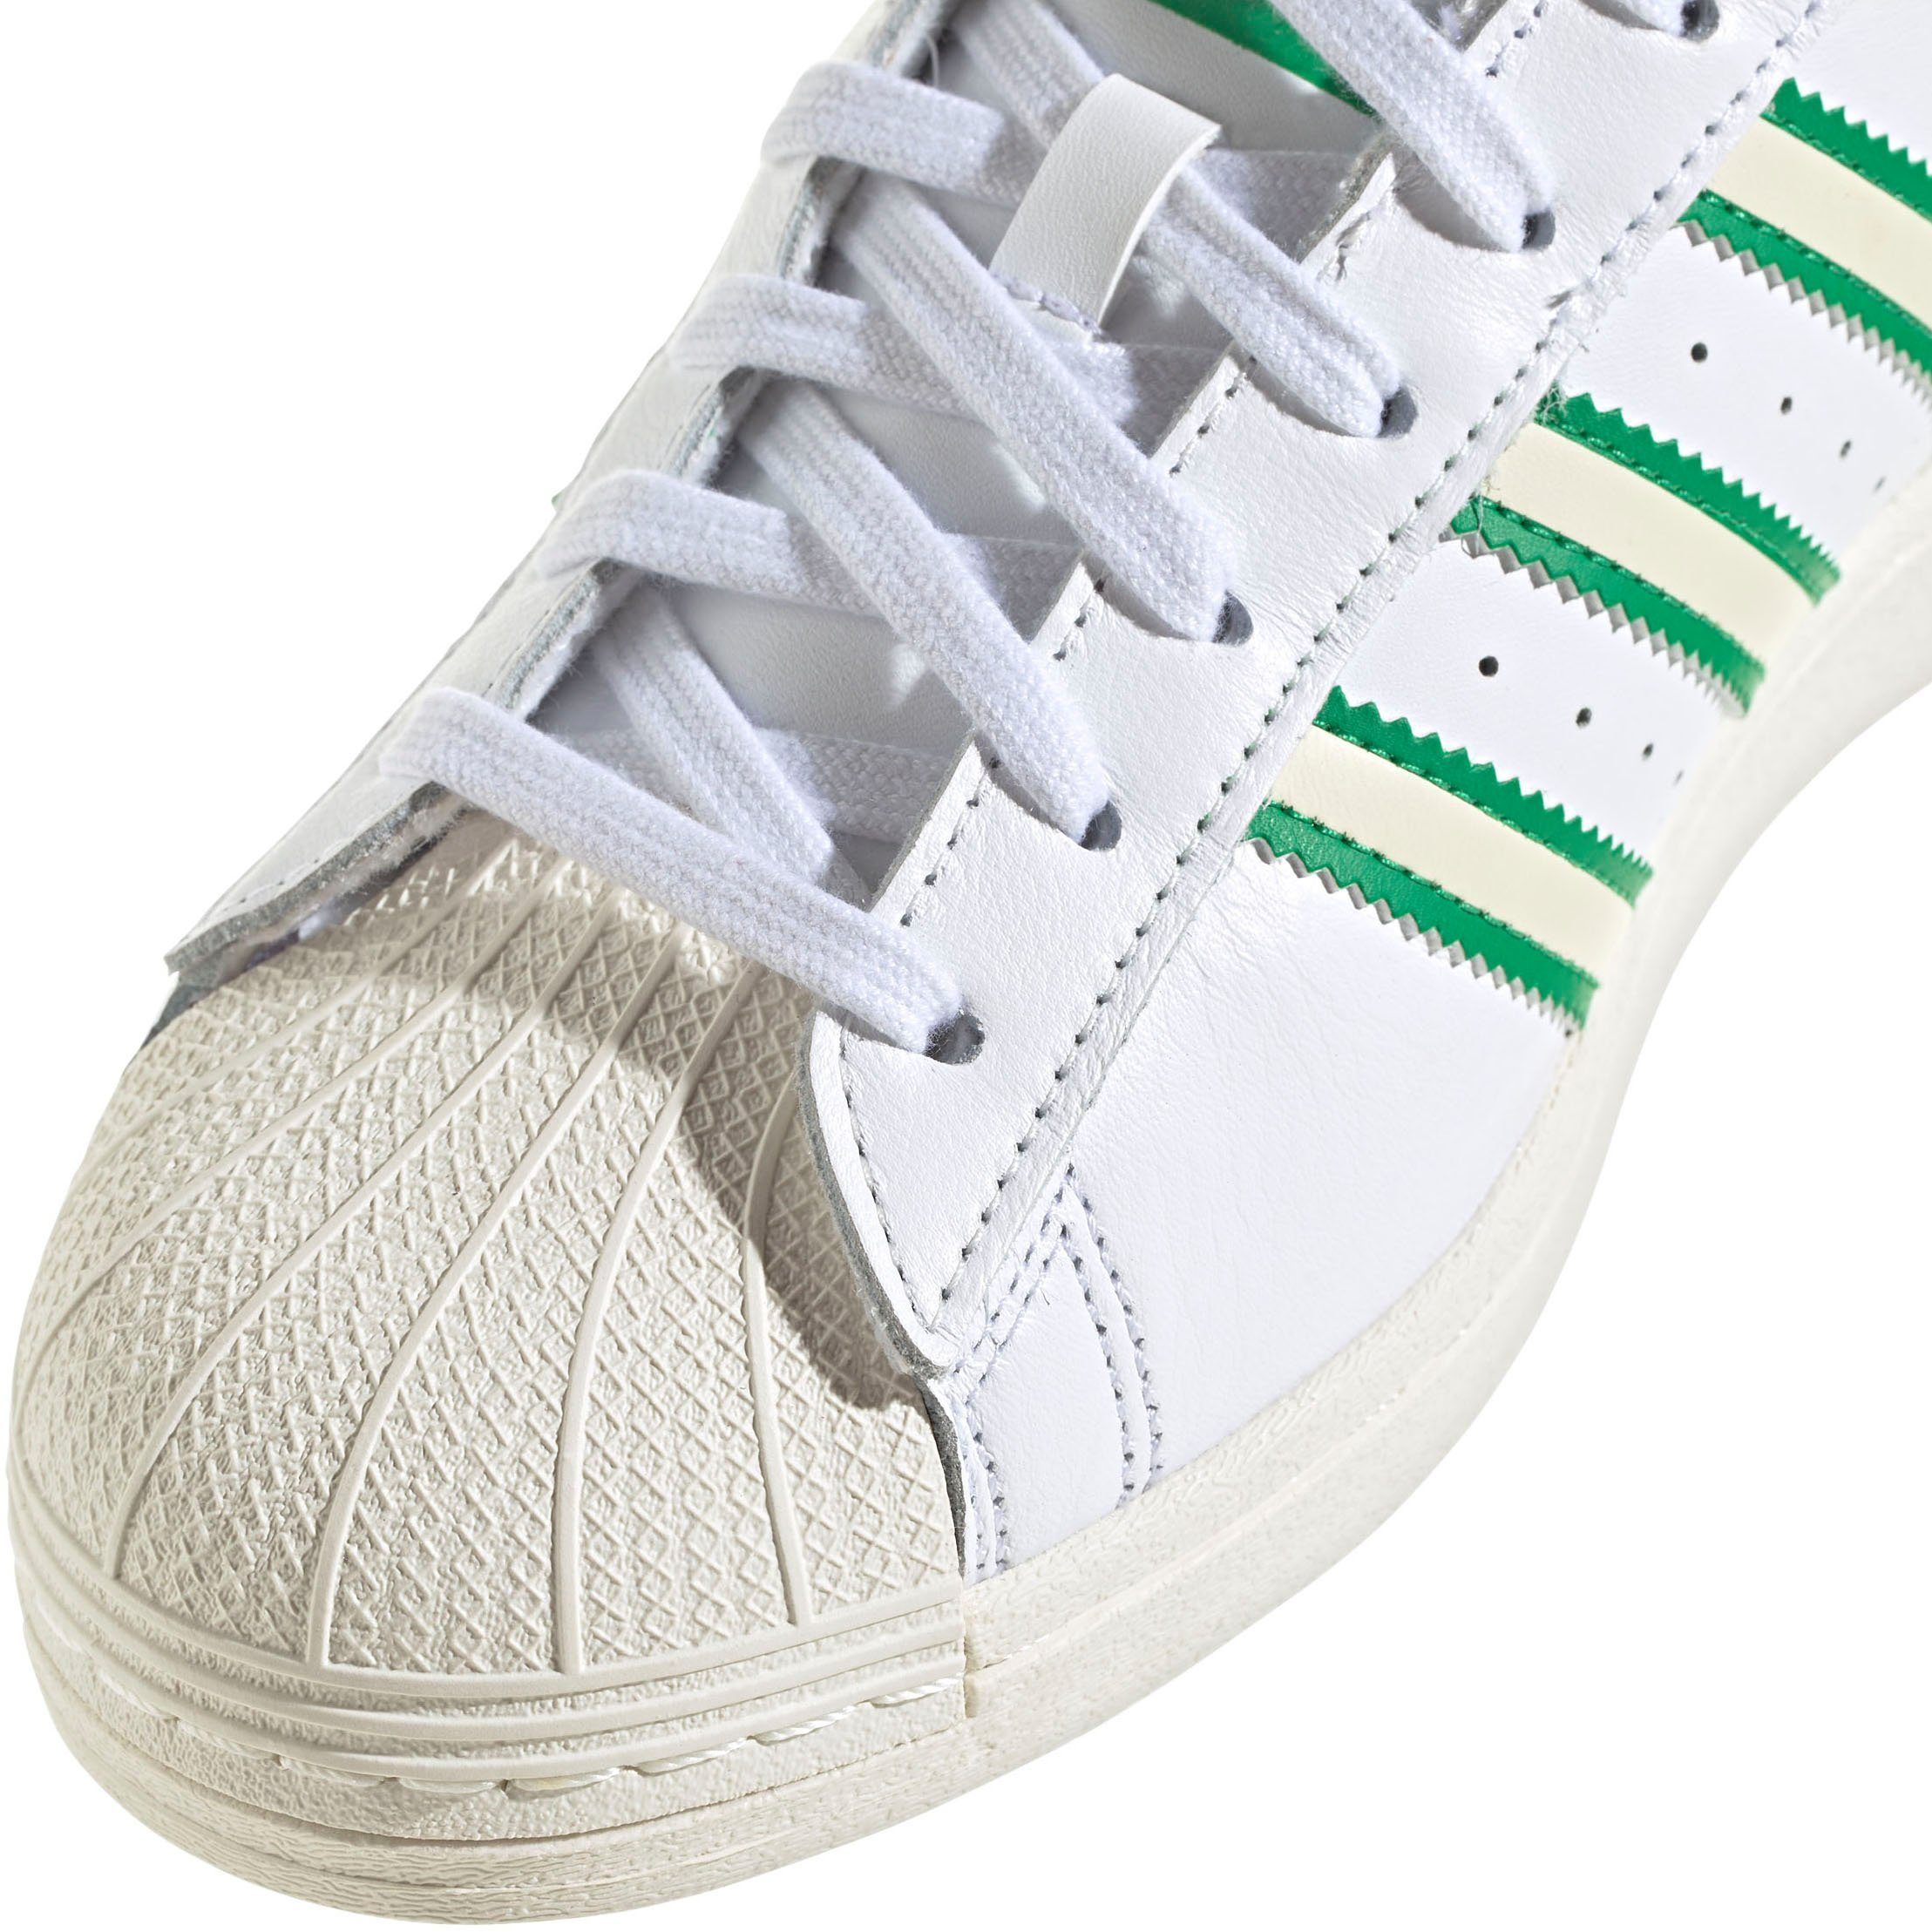 SUPERSTAR adidas Sneaker weiß-grün Originals